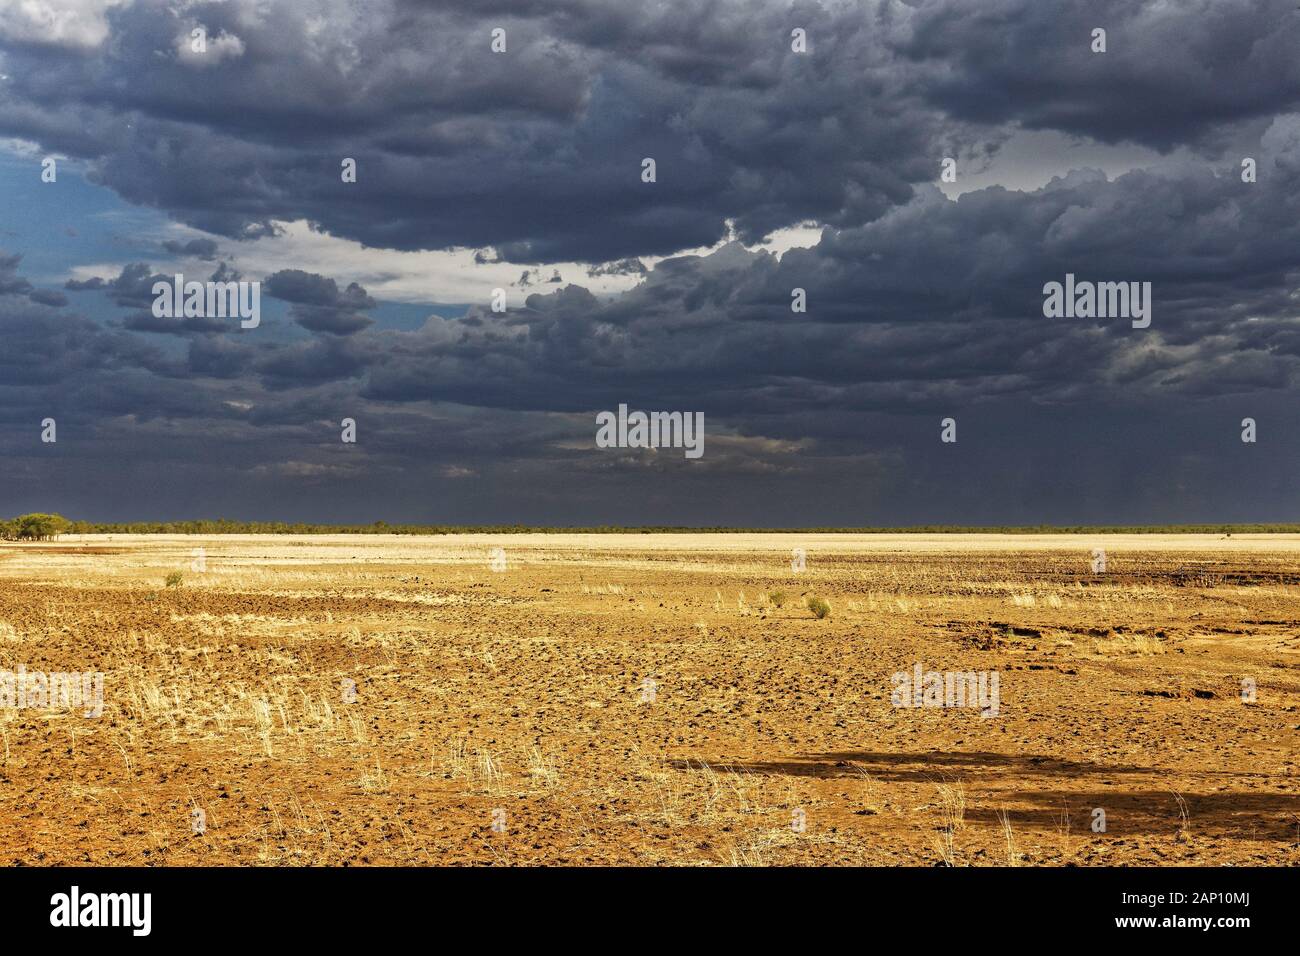 Savannah landscape with stormy sky, West Kimberley, Western Australia | usage worldwide Stock Photo